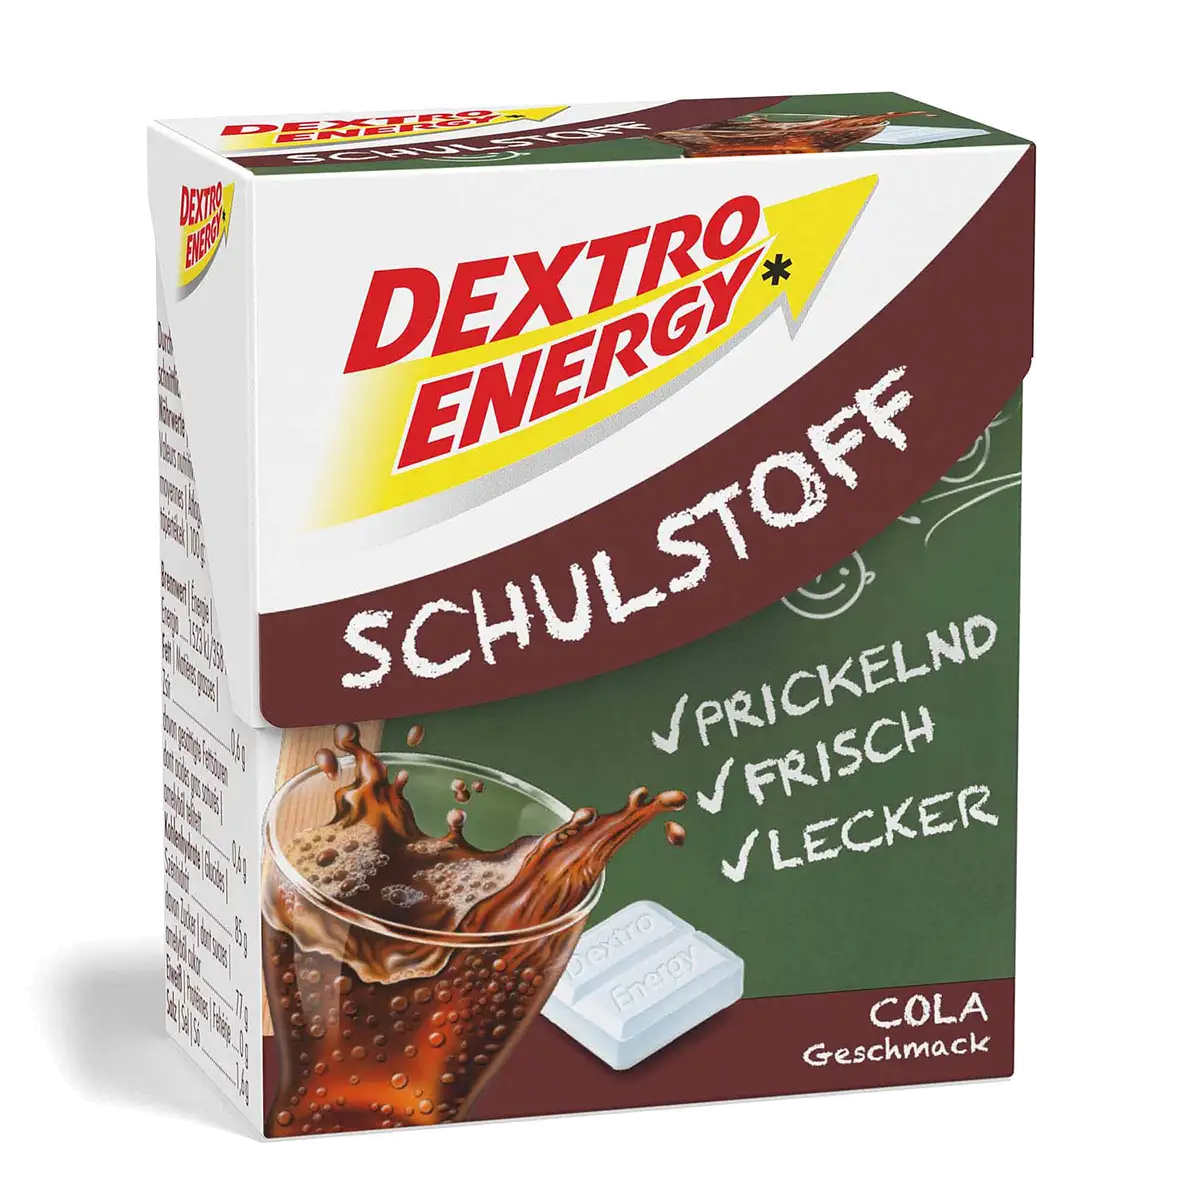 Dextro Energy 'Schulstoff', Cola, 50 g